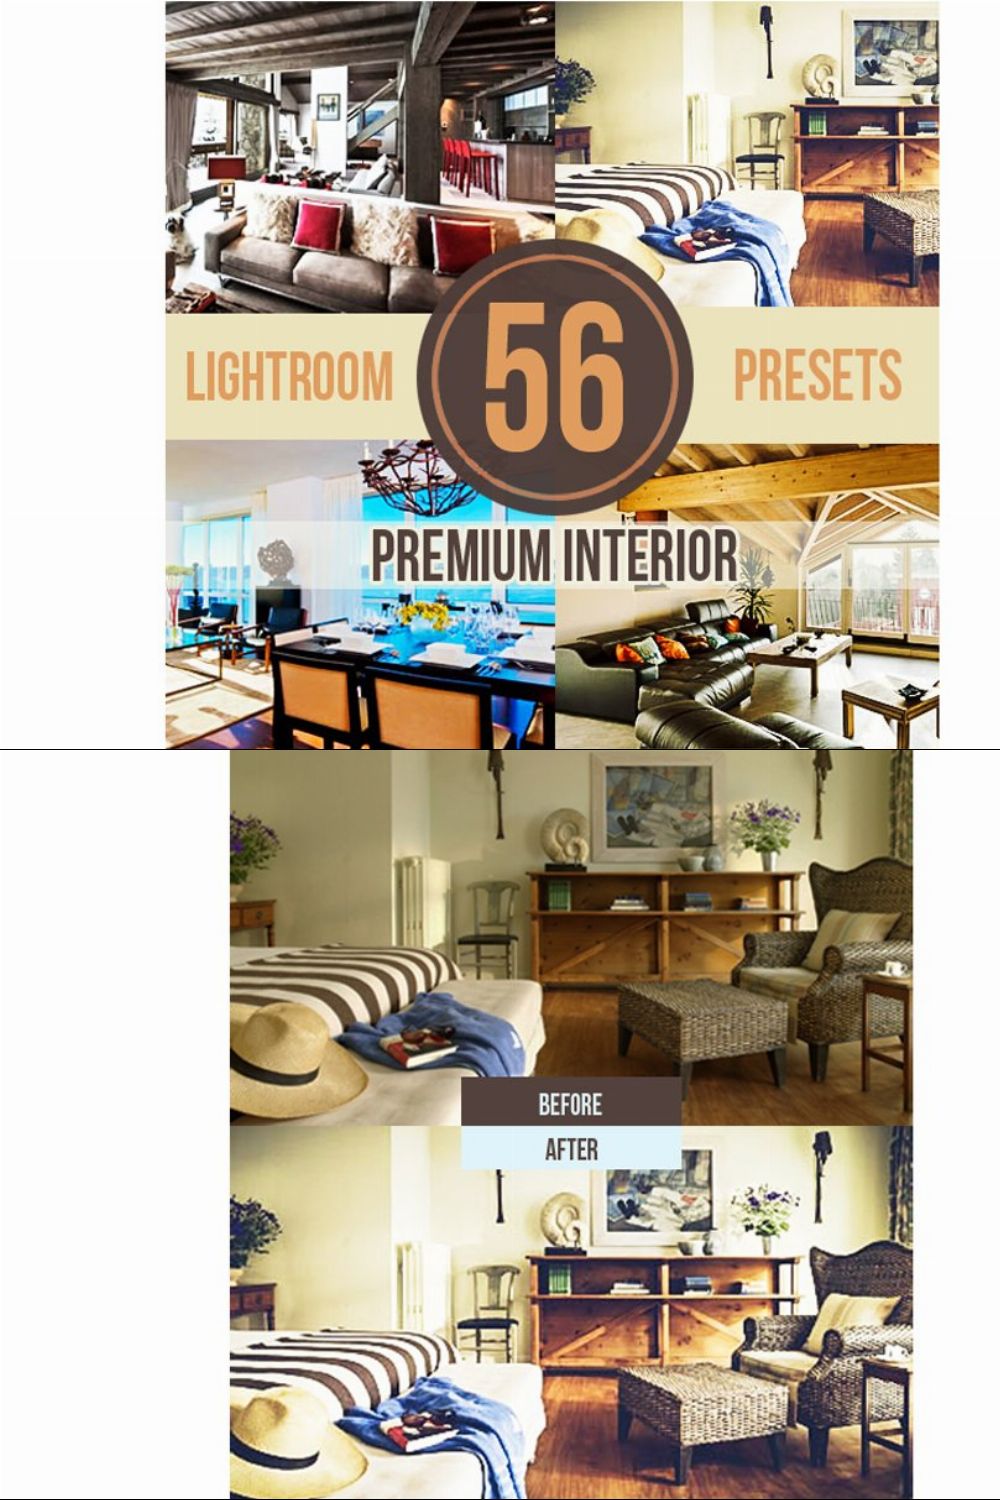 Premium Interior Lightroom Preset pinterest preview image.